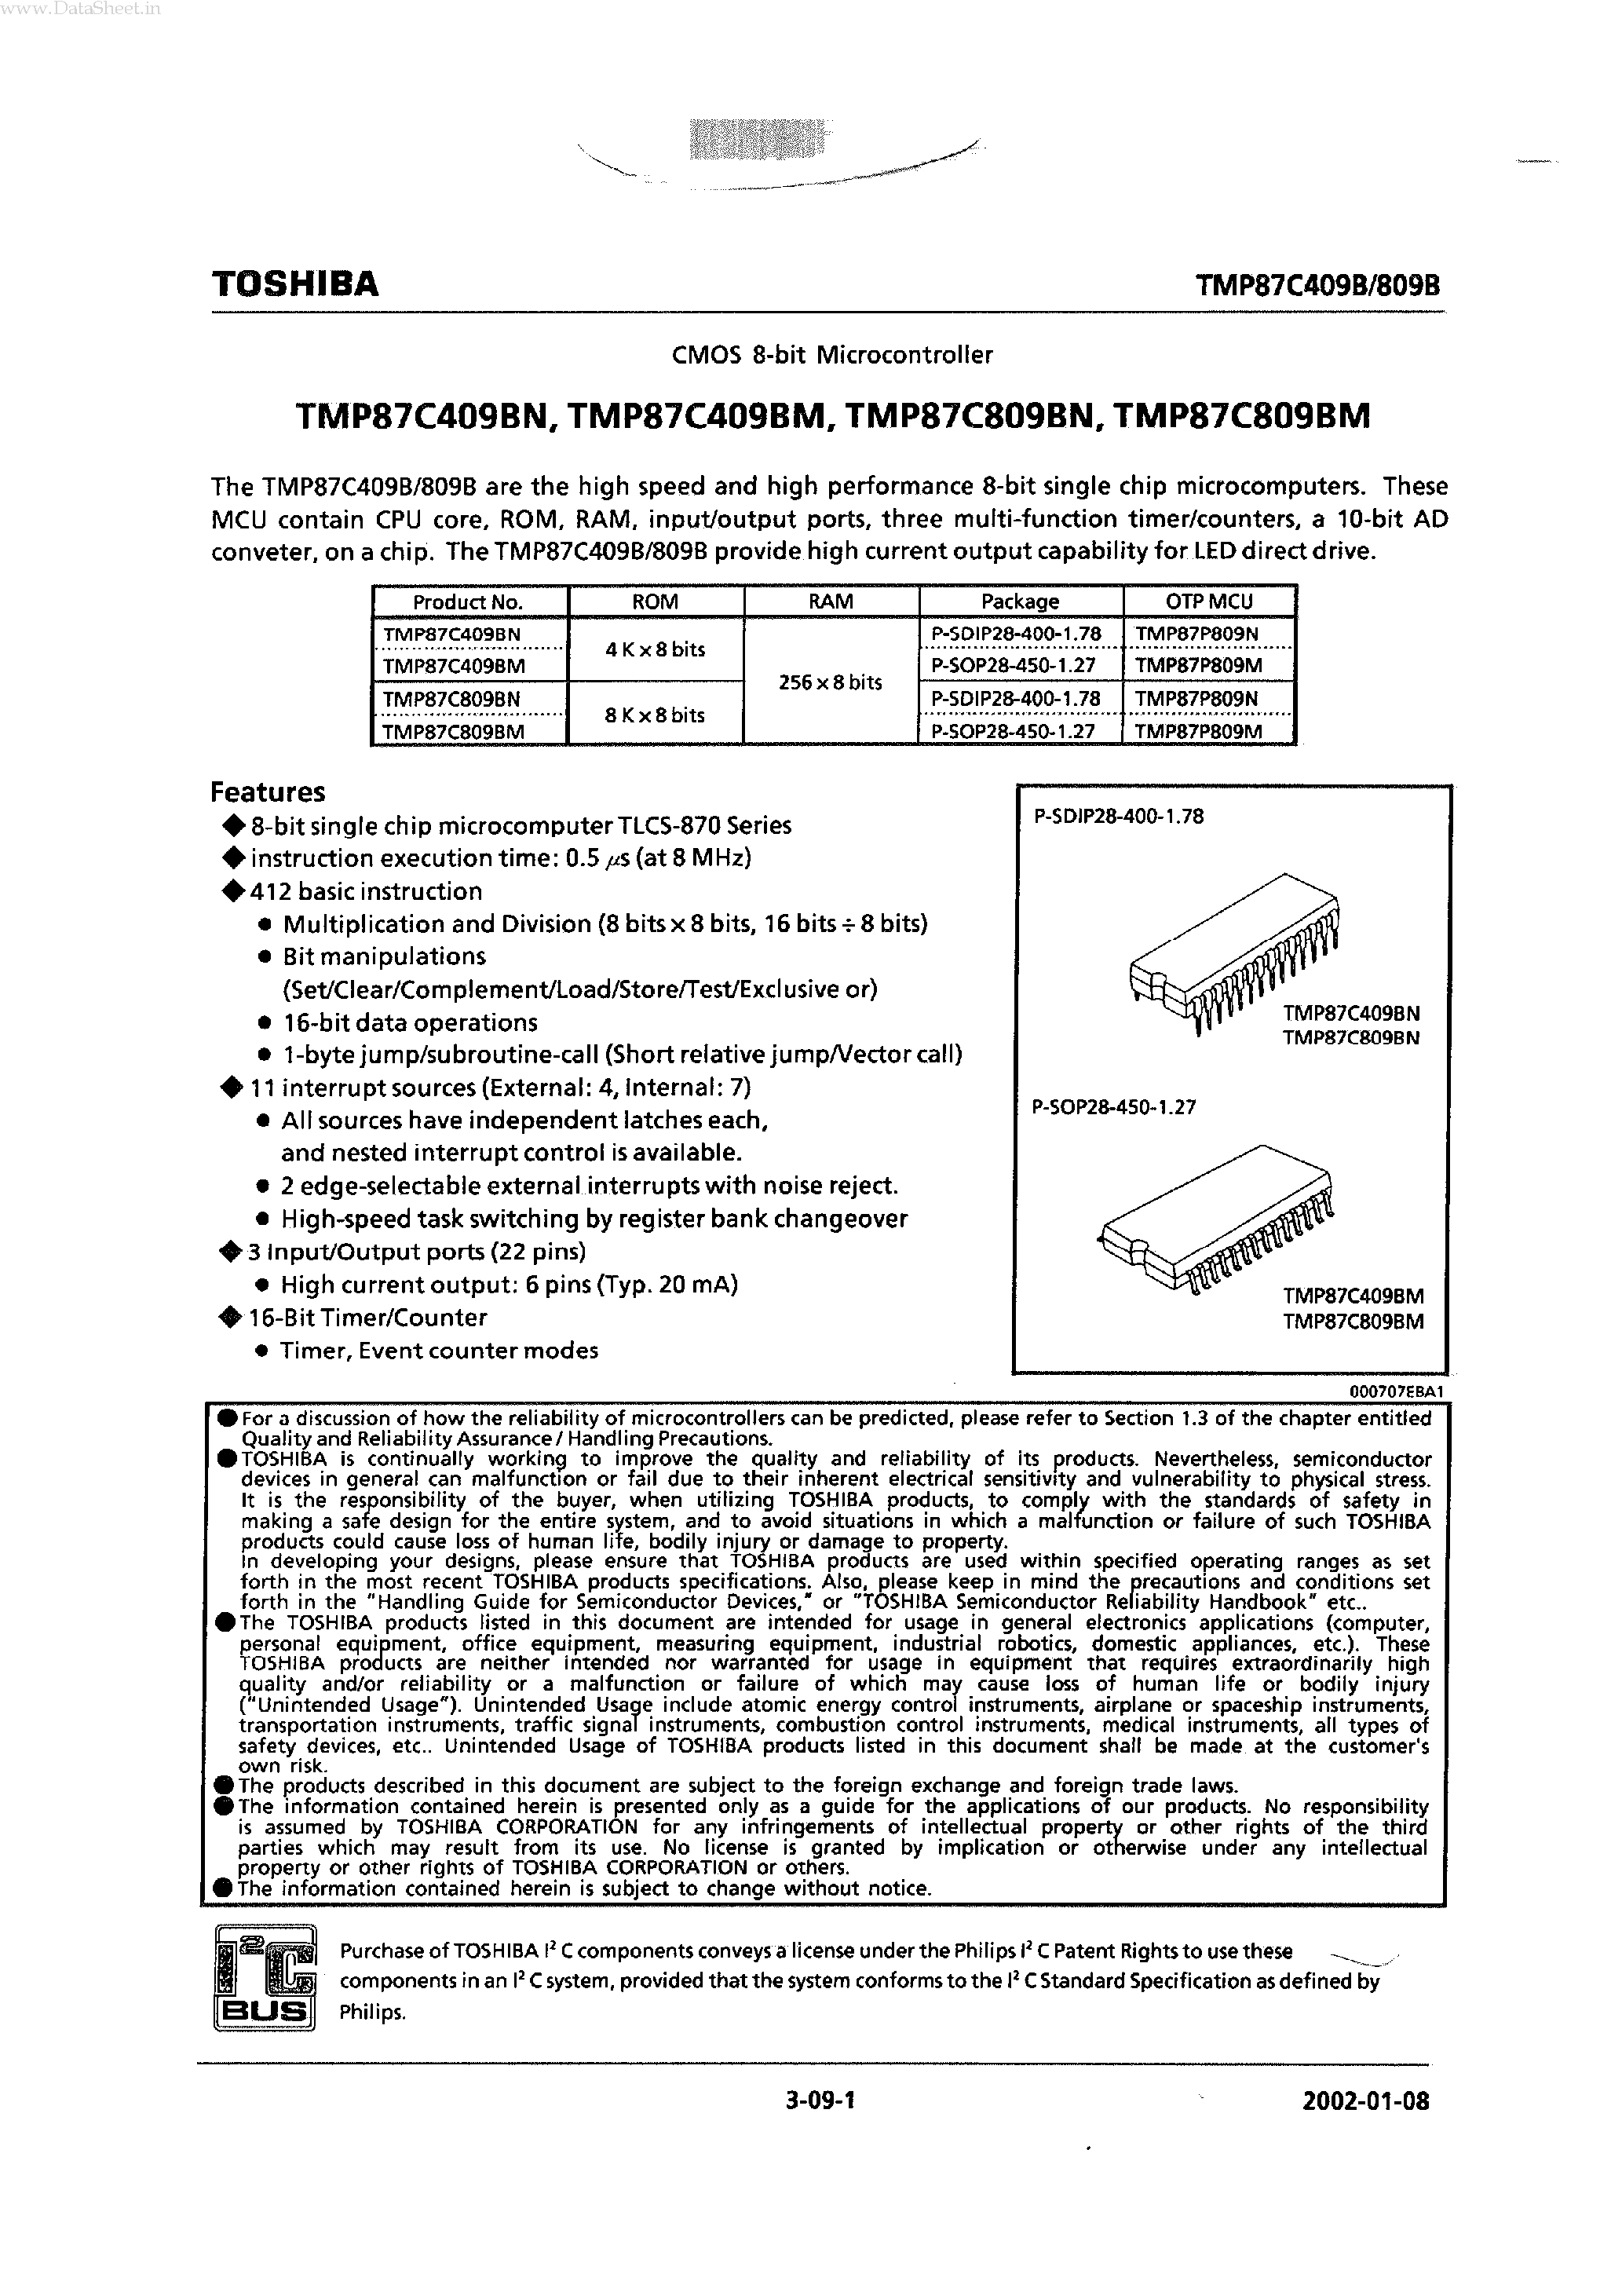 Datasheet TMP87C409B - (TMP87C409B / TMP87C809B) CMOS 8-bit Microcontroller page 1